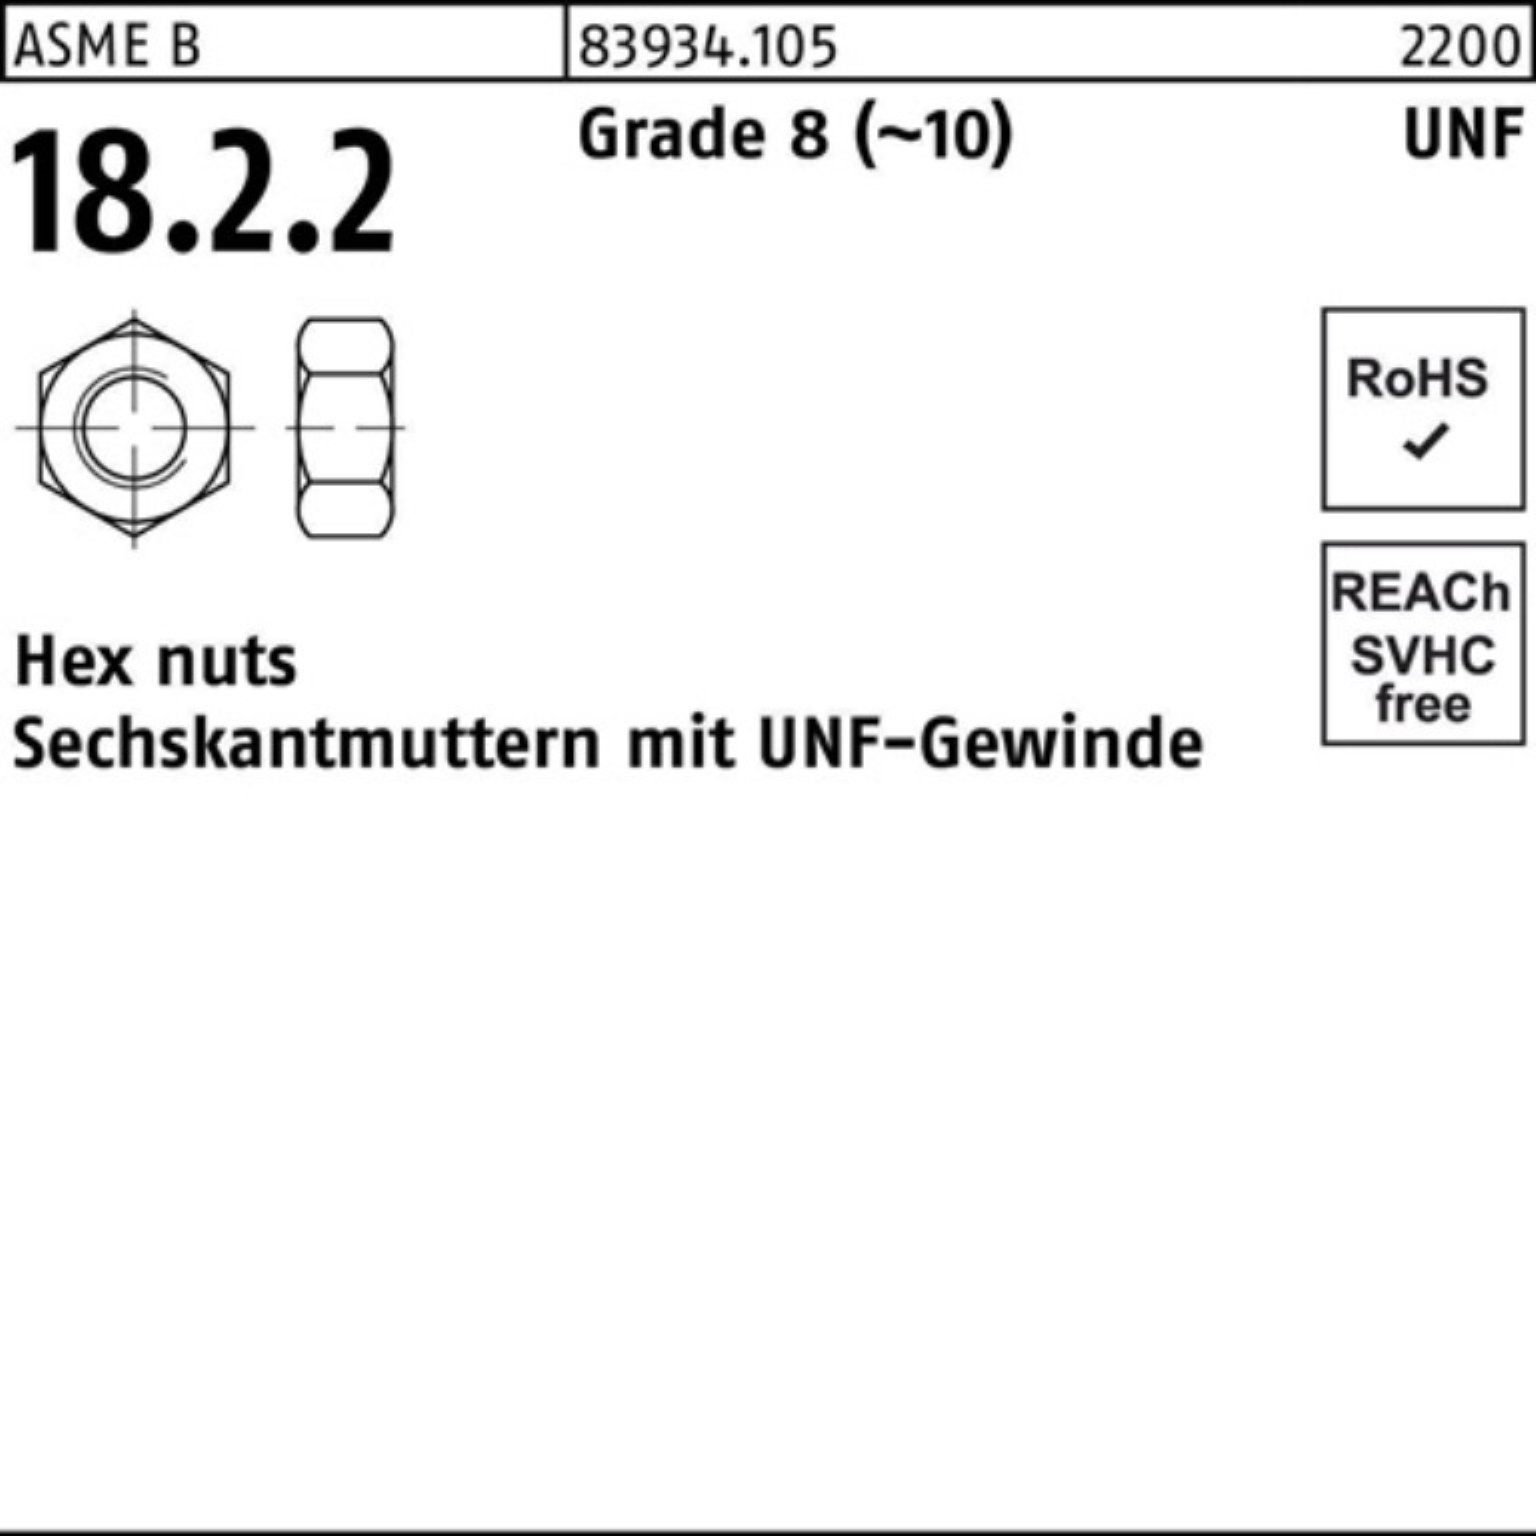 Pack Sechskantmutter Grade 100er 100 R 83934 Muttern UNF-Gewinde Reyher 1/4 (10) 8 S